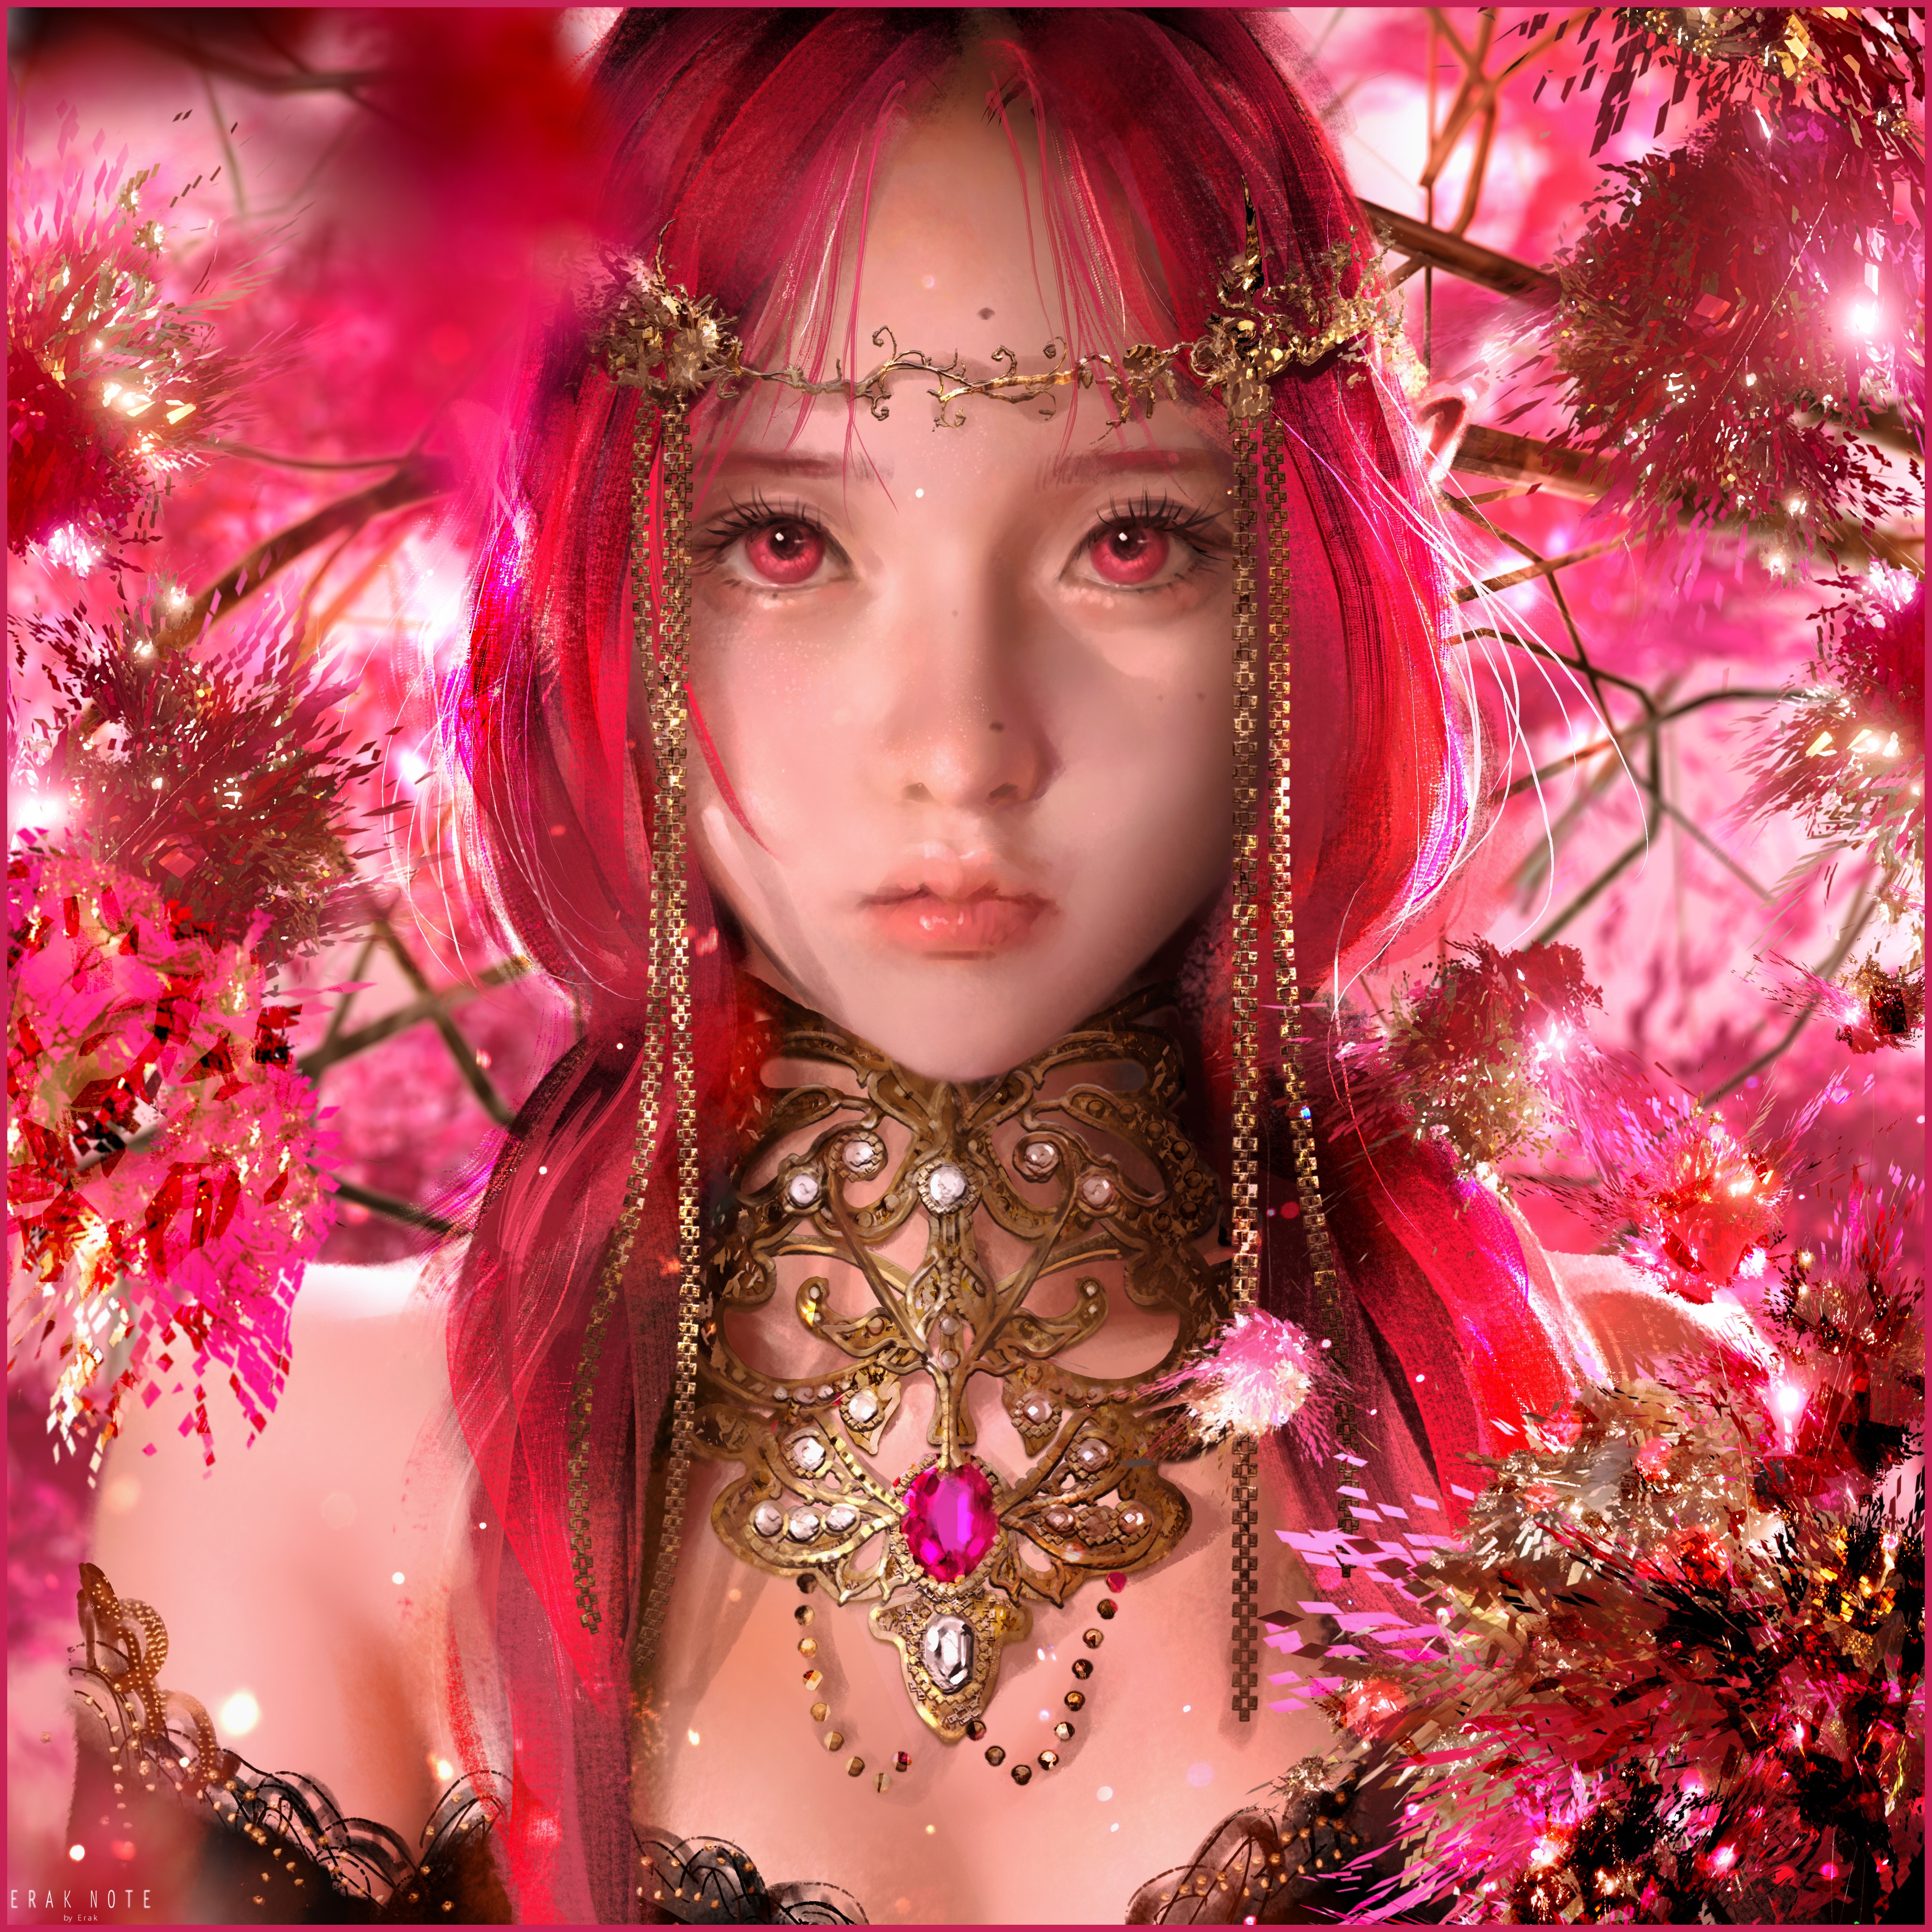 Digital Digital Art Artwork Illustration Portrait Looking At Viewer Women Fantasy Art Fantasy Girl E 4000x4000